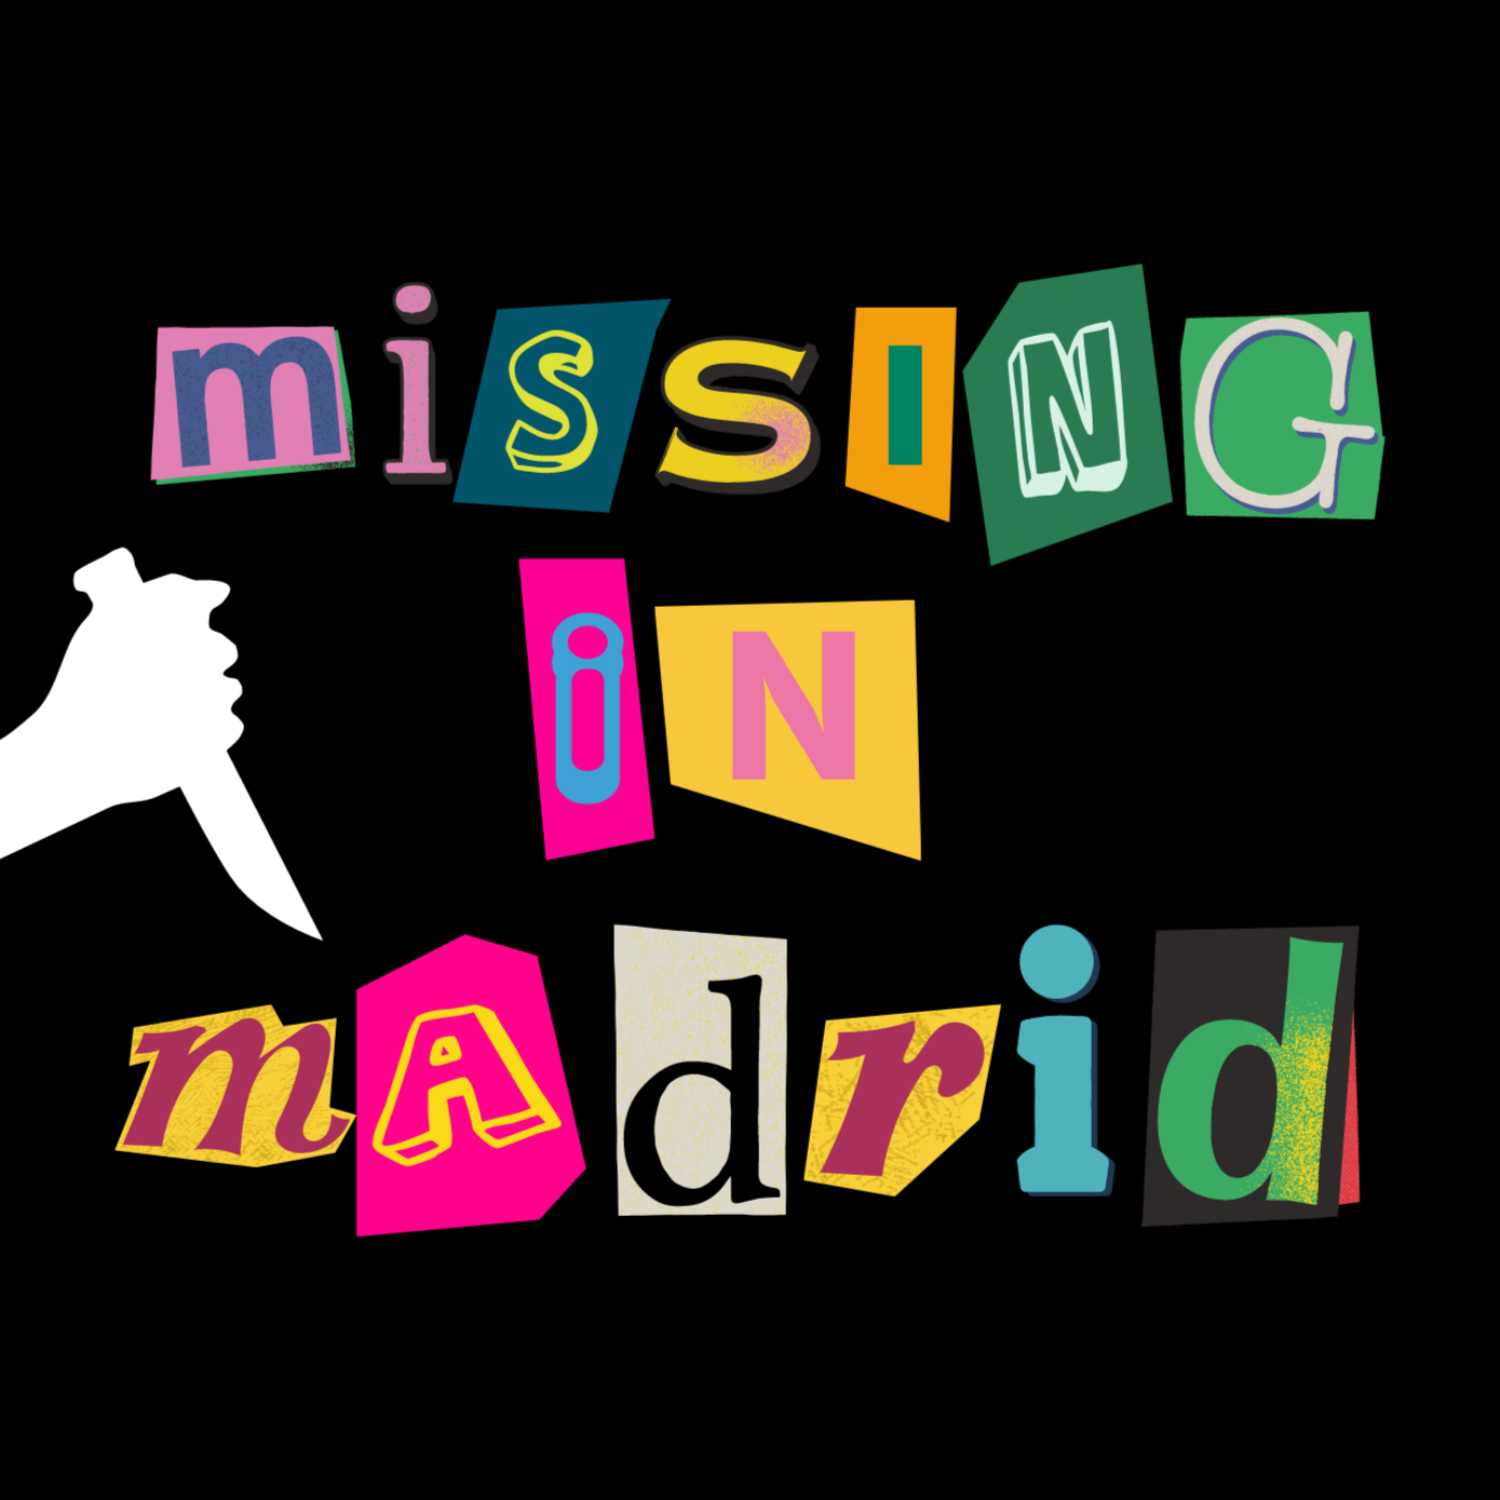 Missing in Madrid